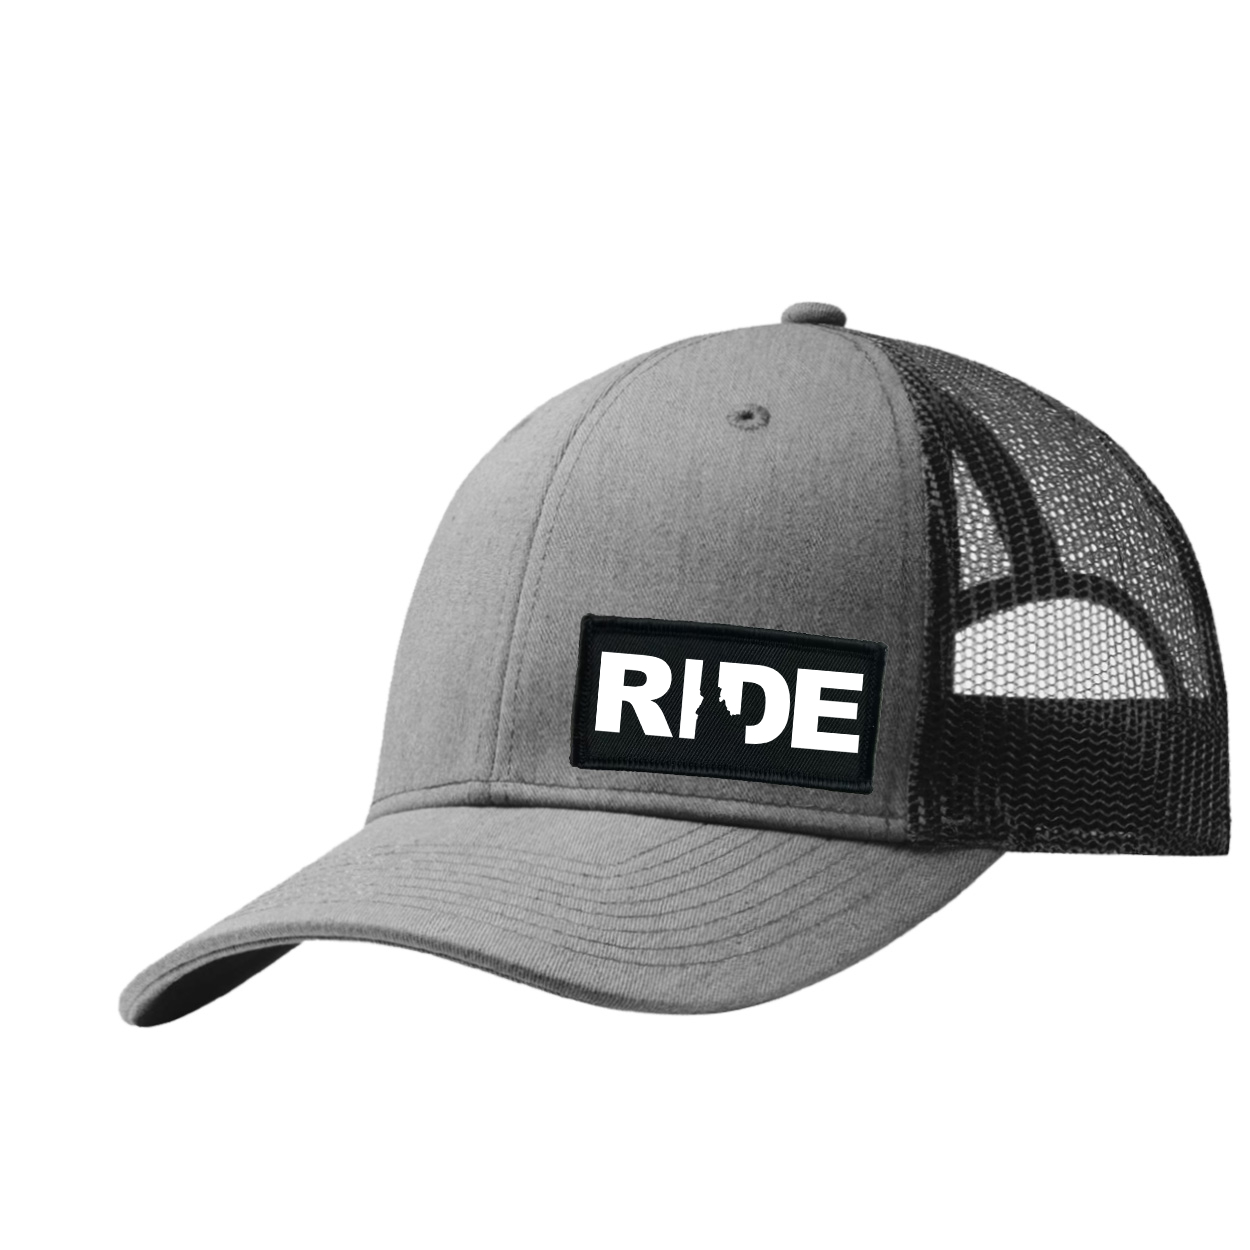 Ride Idaho Night Out Woven Patch Snapback Trucker Hat Heather Gray/Black (White Logo)